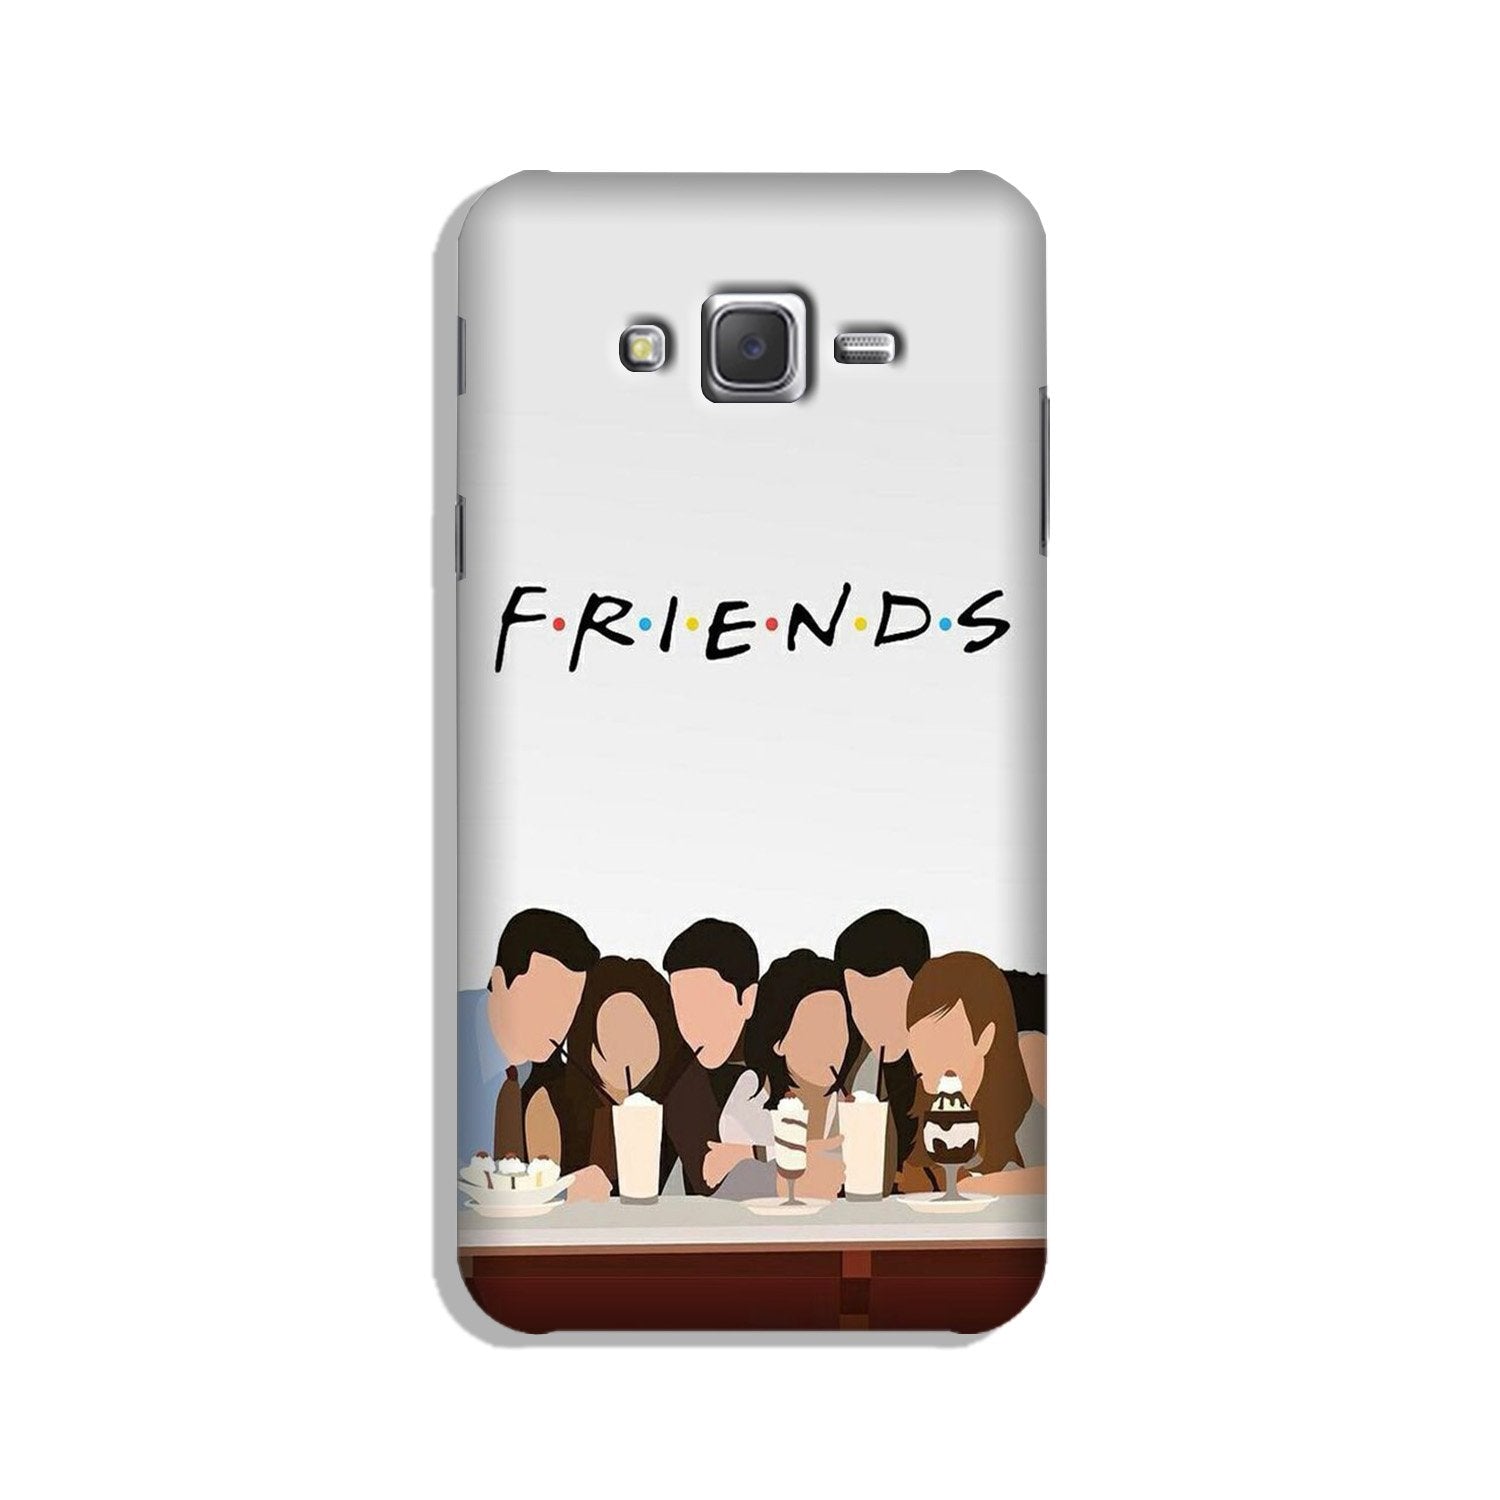 Friends Case for Galaxy J7 Nxt (Design - 200)